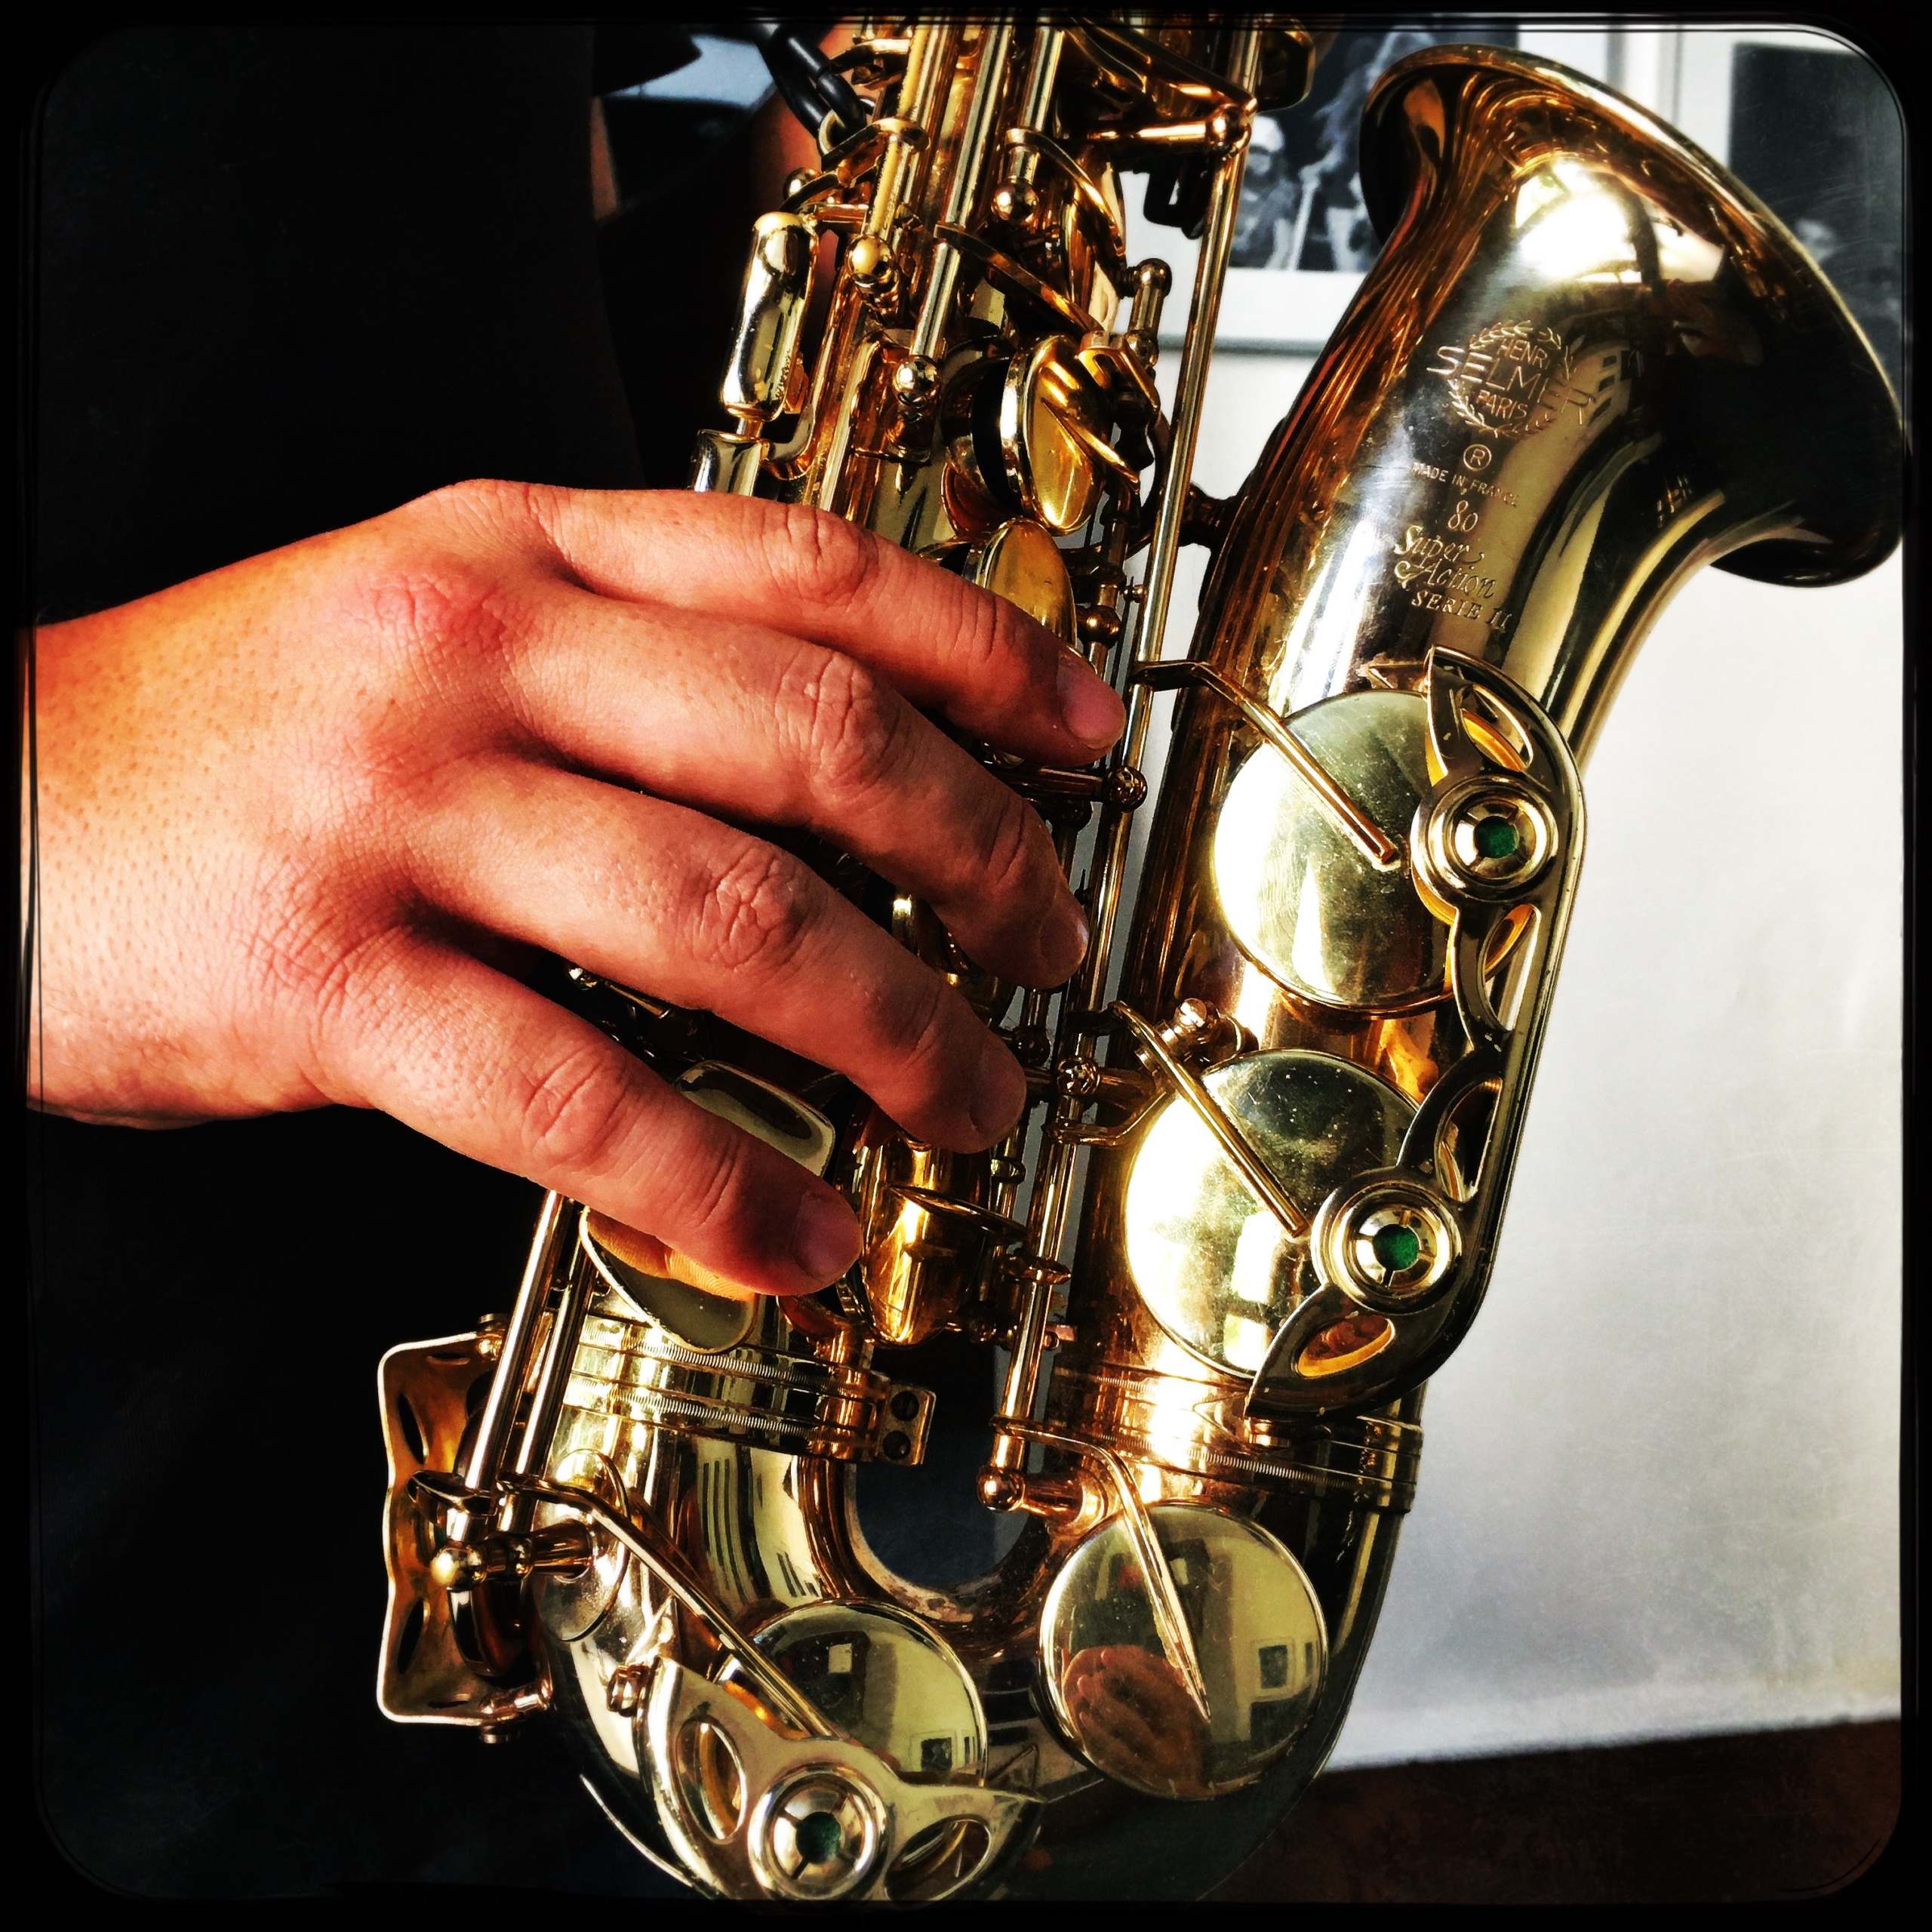 Instrument Saxophone